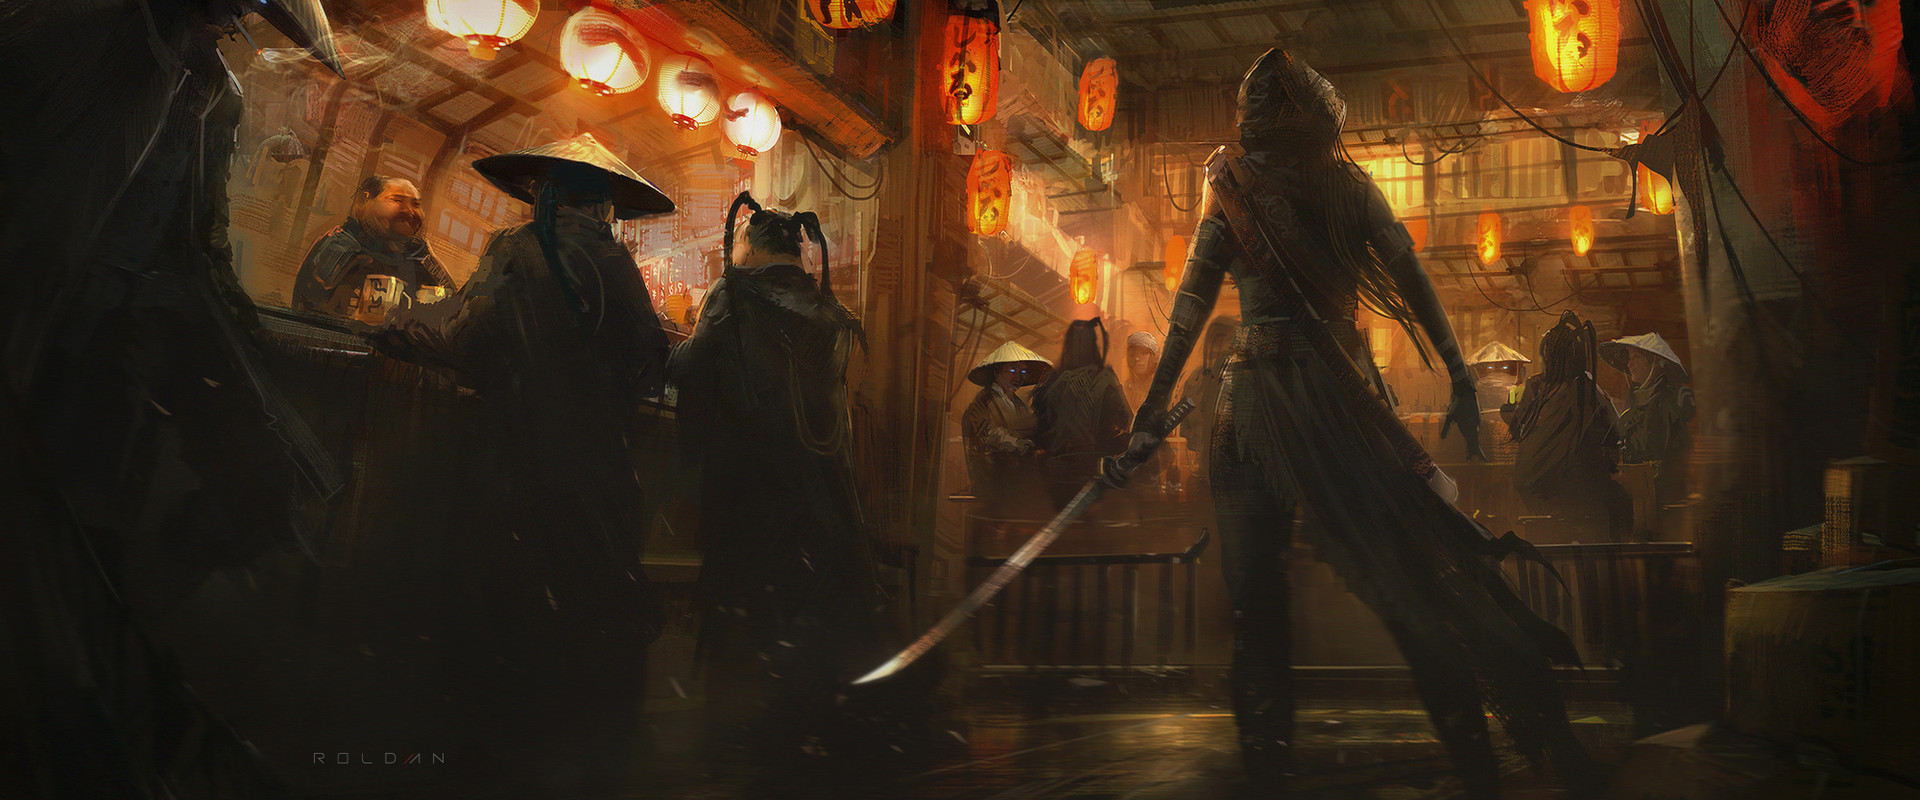 Artwork Science Fiction Environment Lamp Bar Warrior Assassins Katana Sword Weapon Concept Art Drawi 1920x800